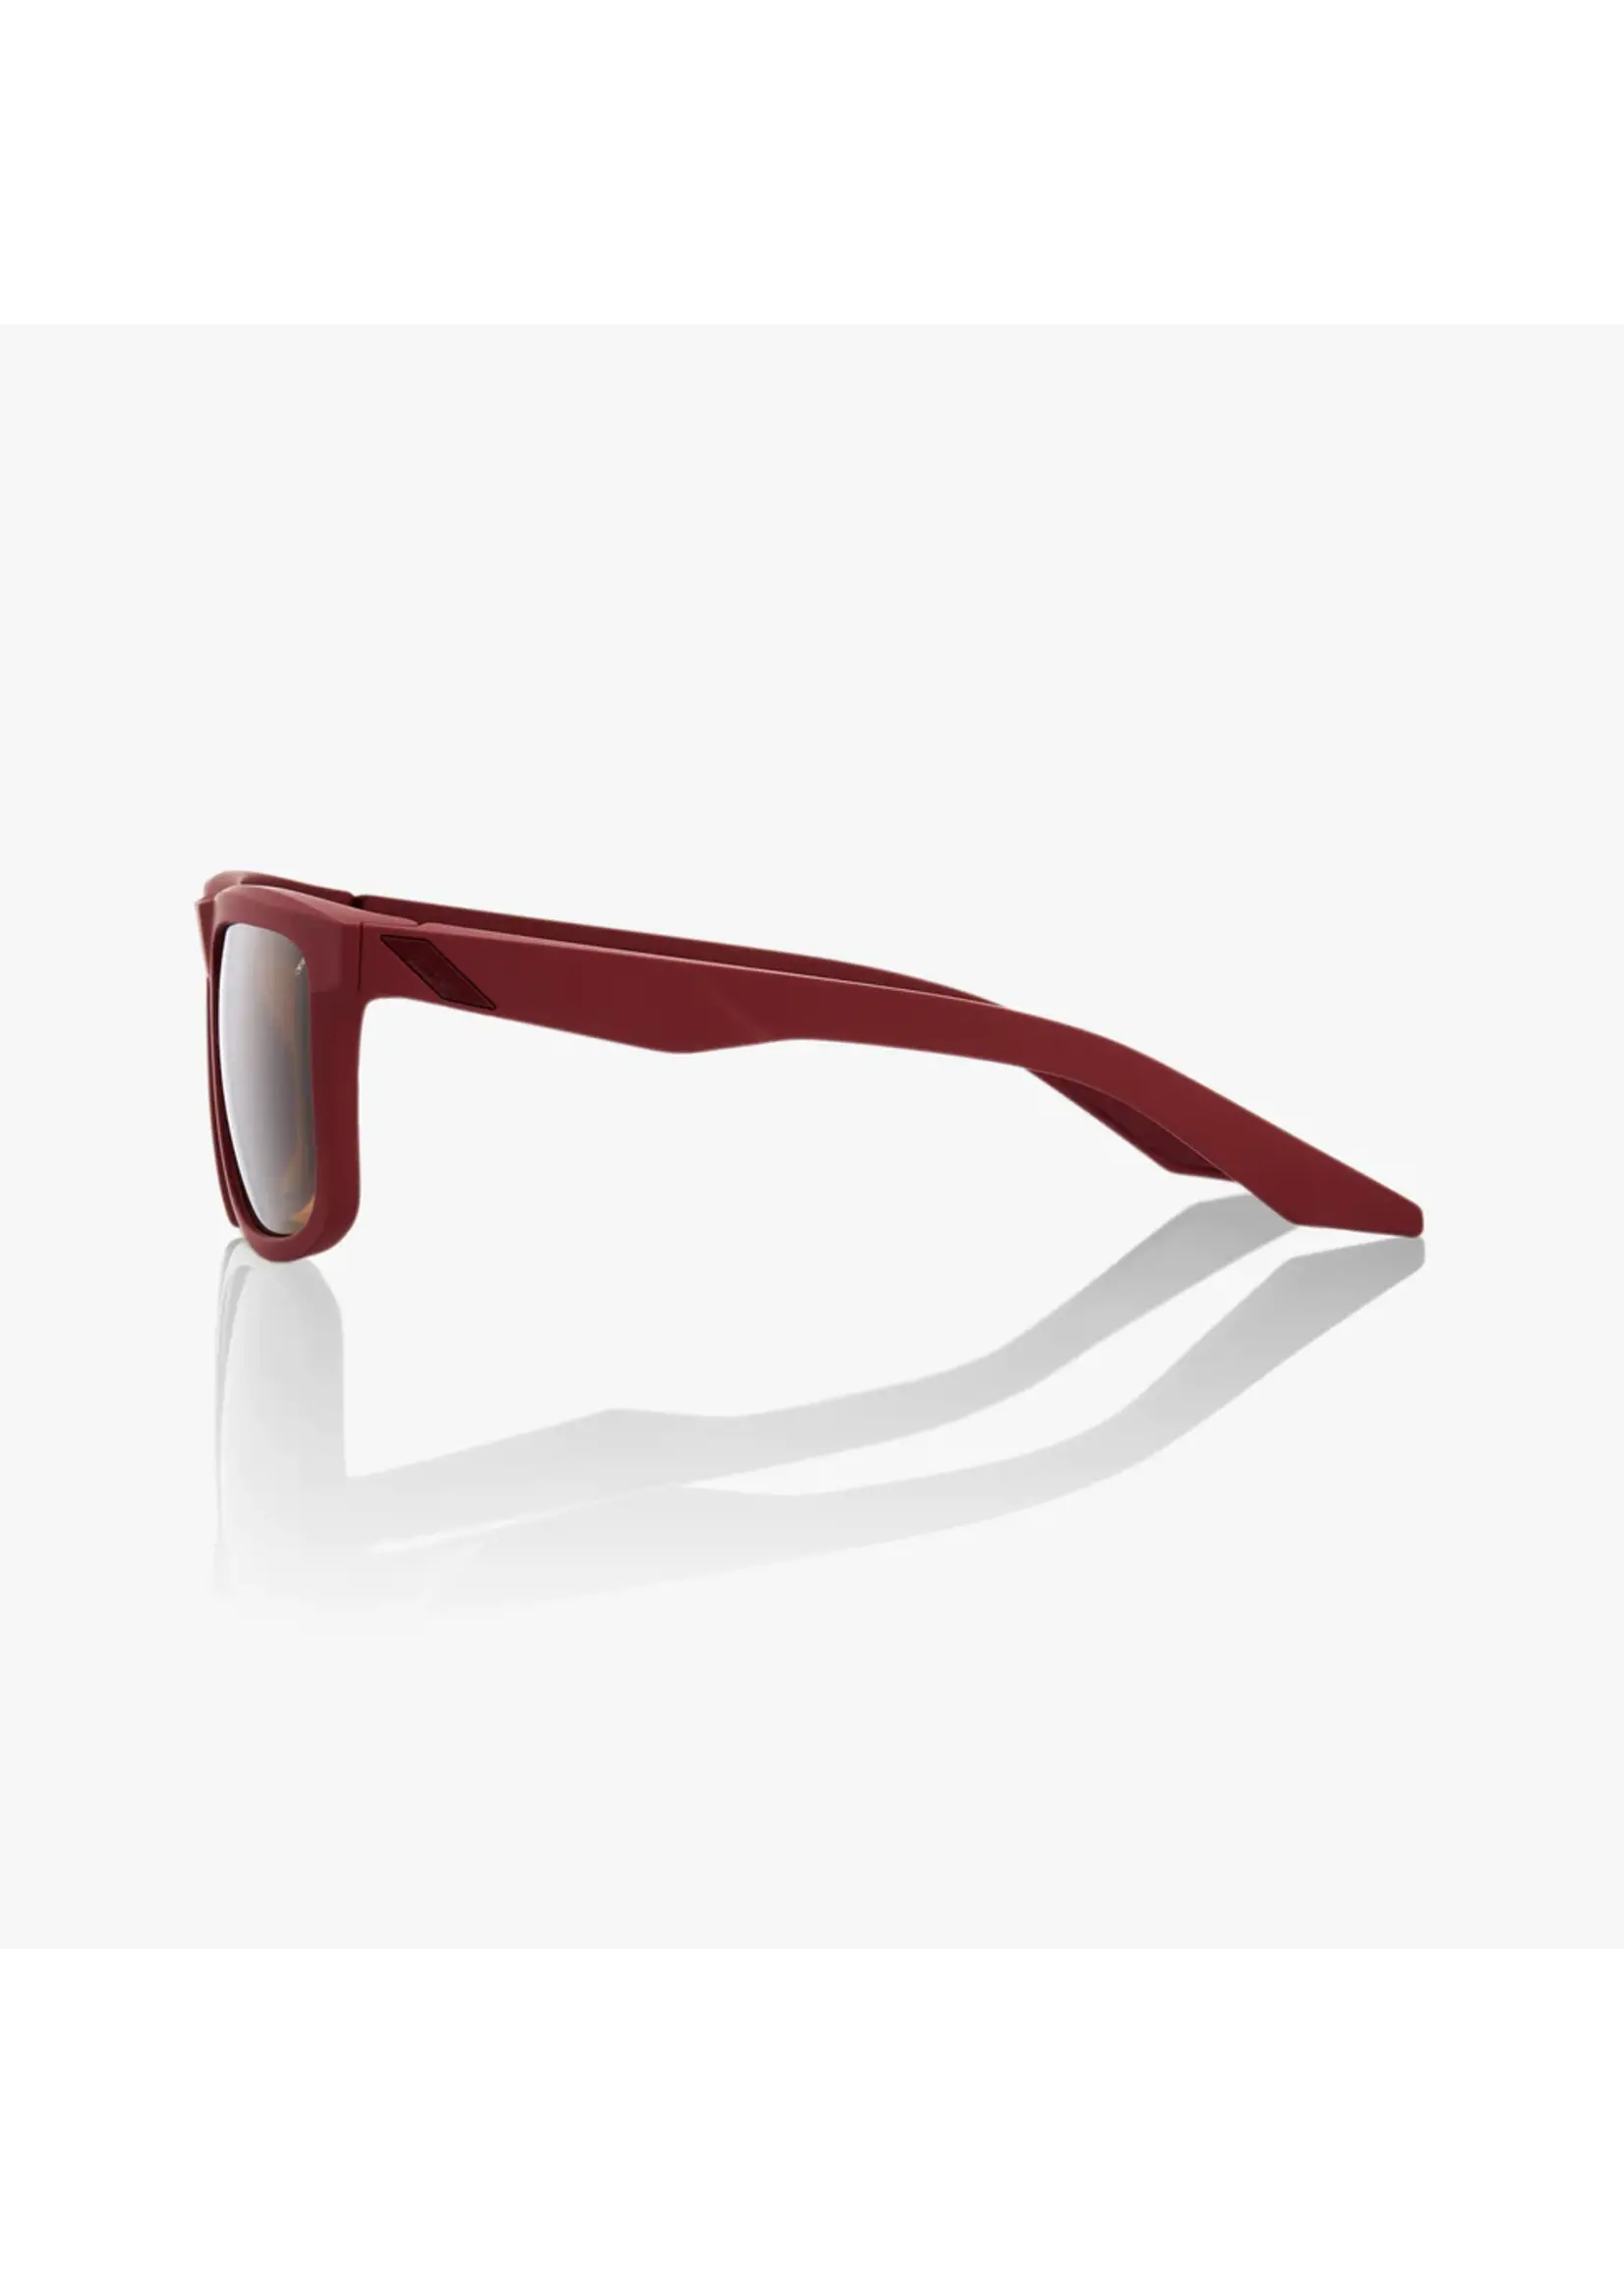 100 Percent 100% Blake Sunglasses, Soft Tact Crimson frame - Bronze Lens